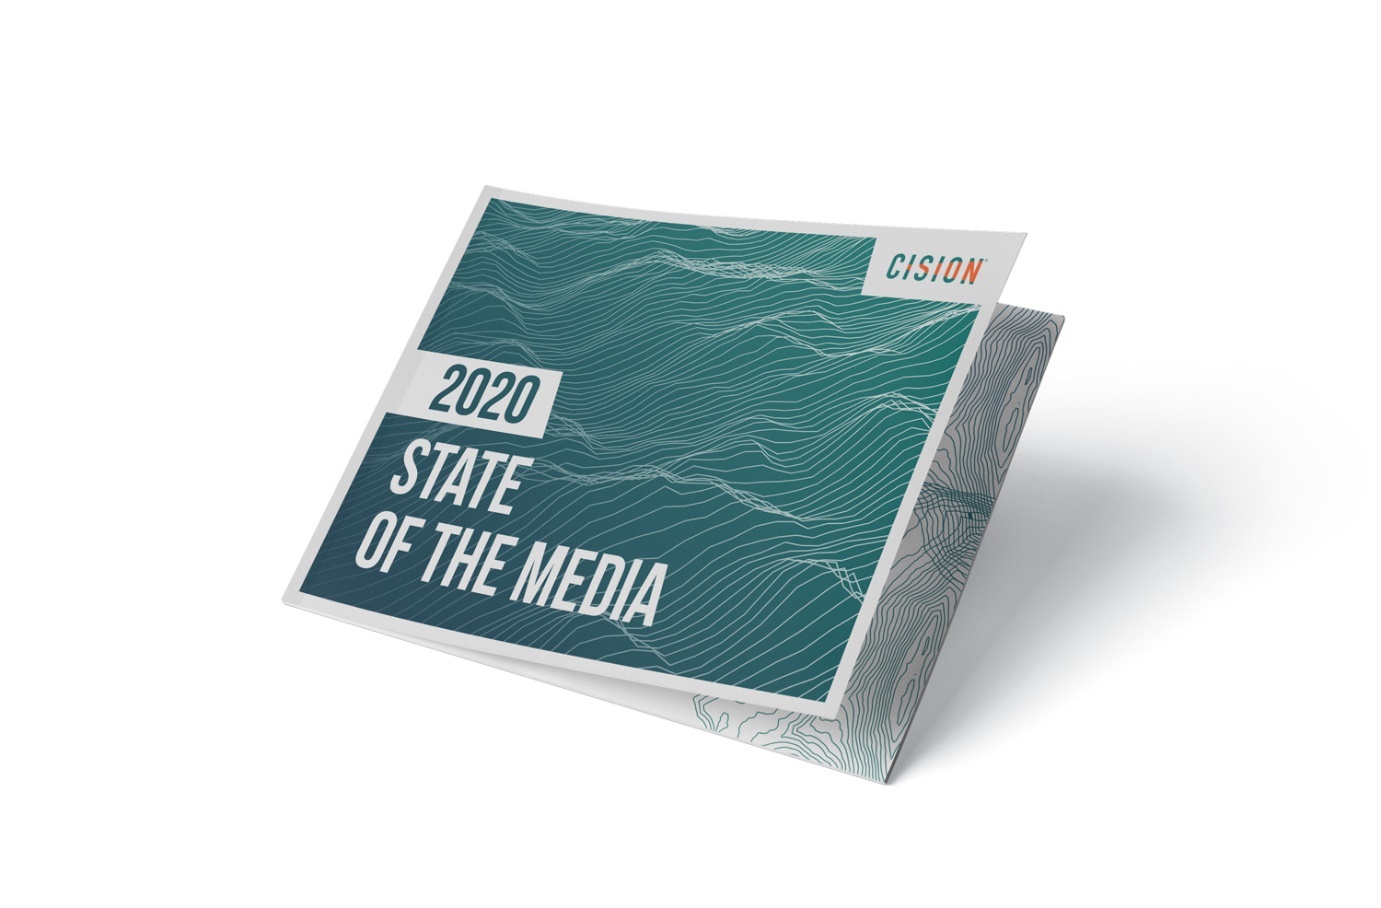 Cision เปิดตัวรายงาน 2020 State of the Media Report เผยให้เห็นเทรนด์และความท้าทายล่าสุดที่แวดวงสื่อกำลังเผชิญ